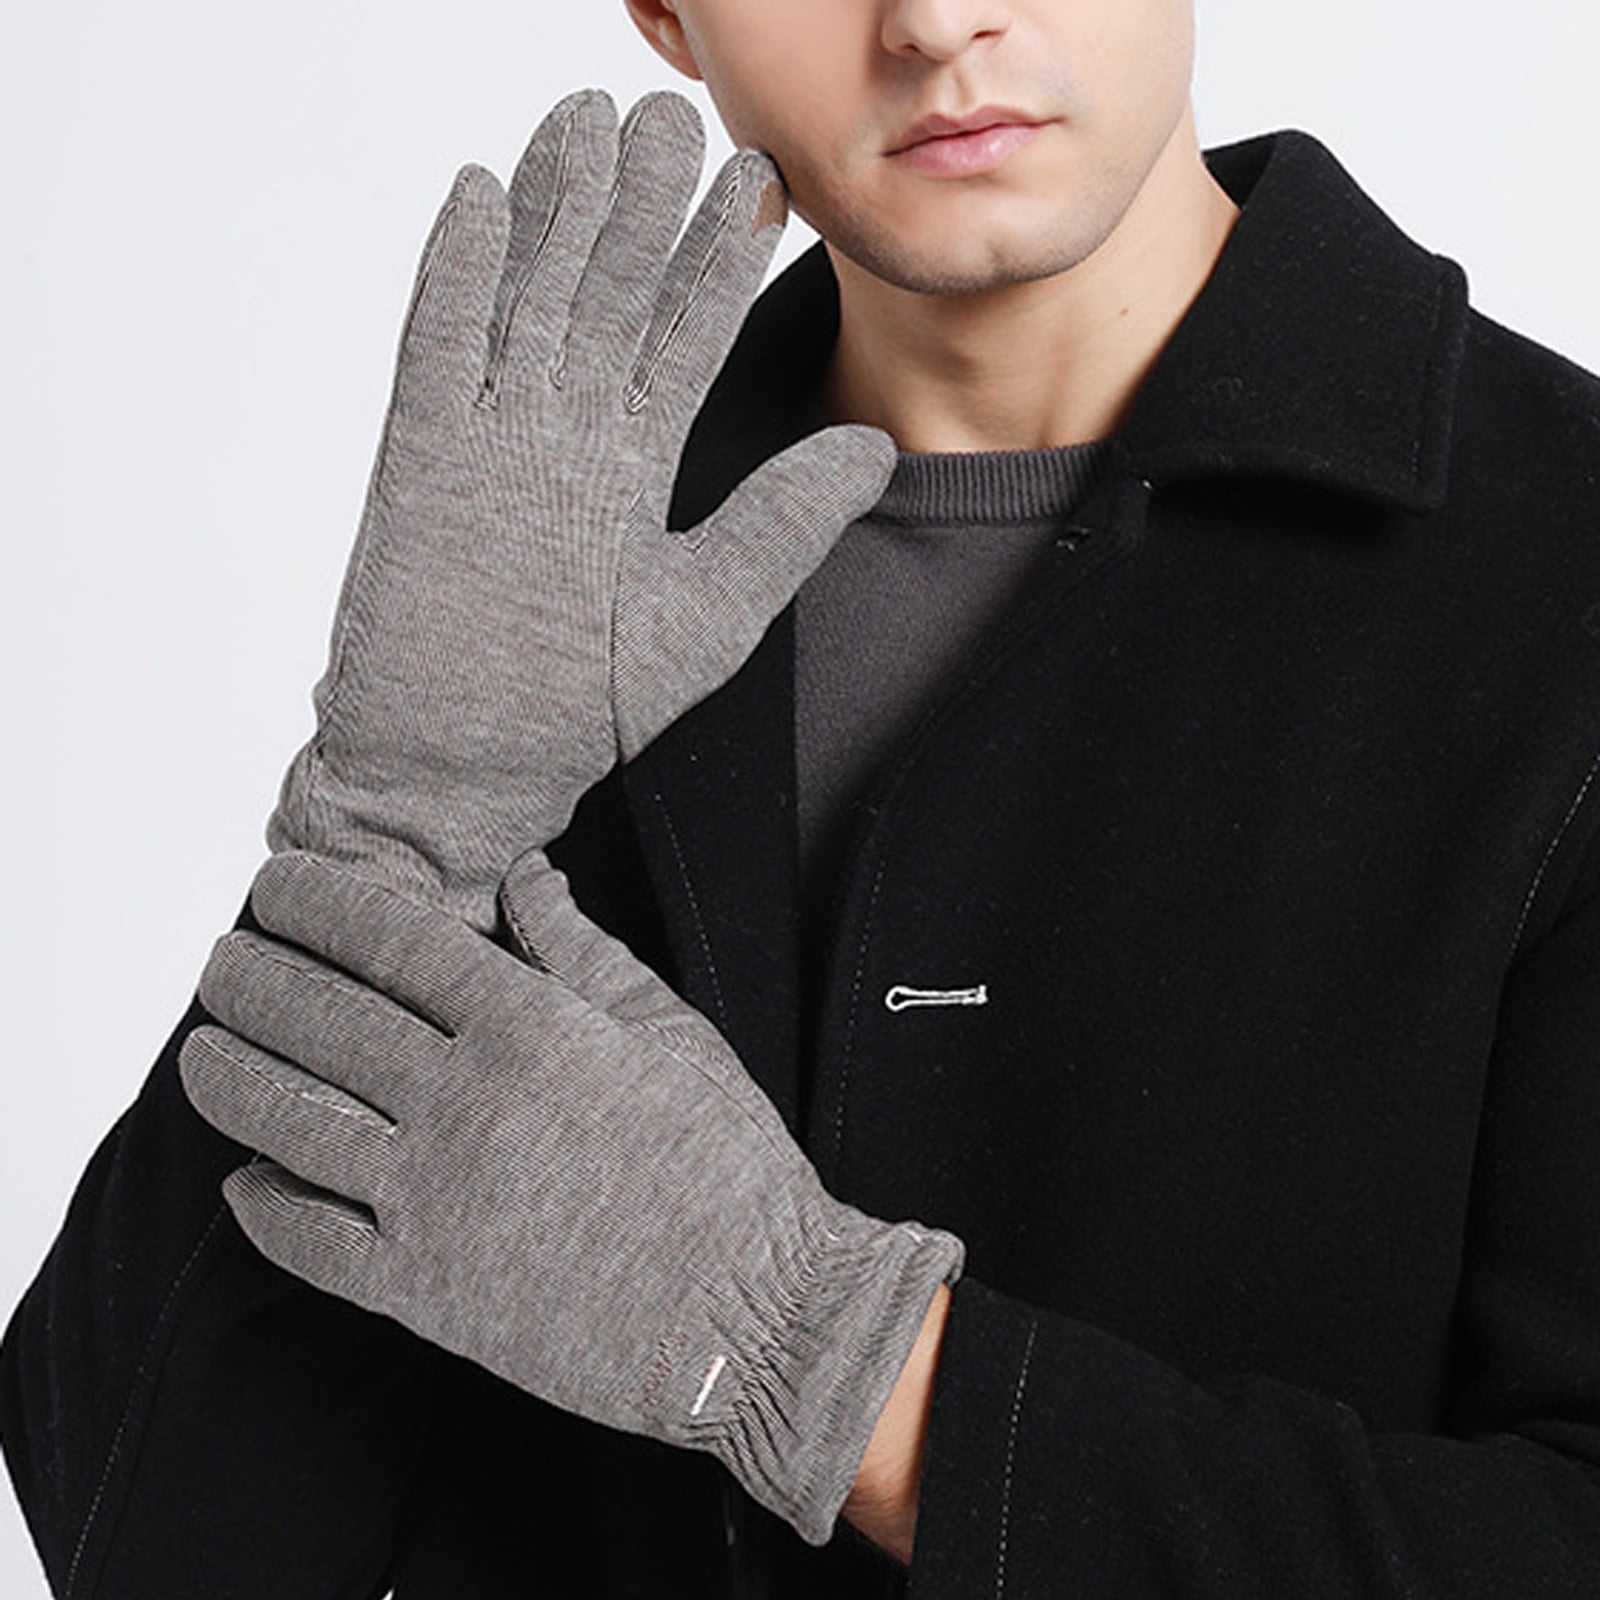 LEEy-world Gloves For Men Mens Warm Winter Wool Gloves Knit